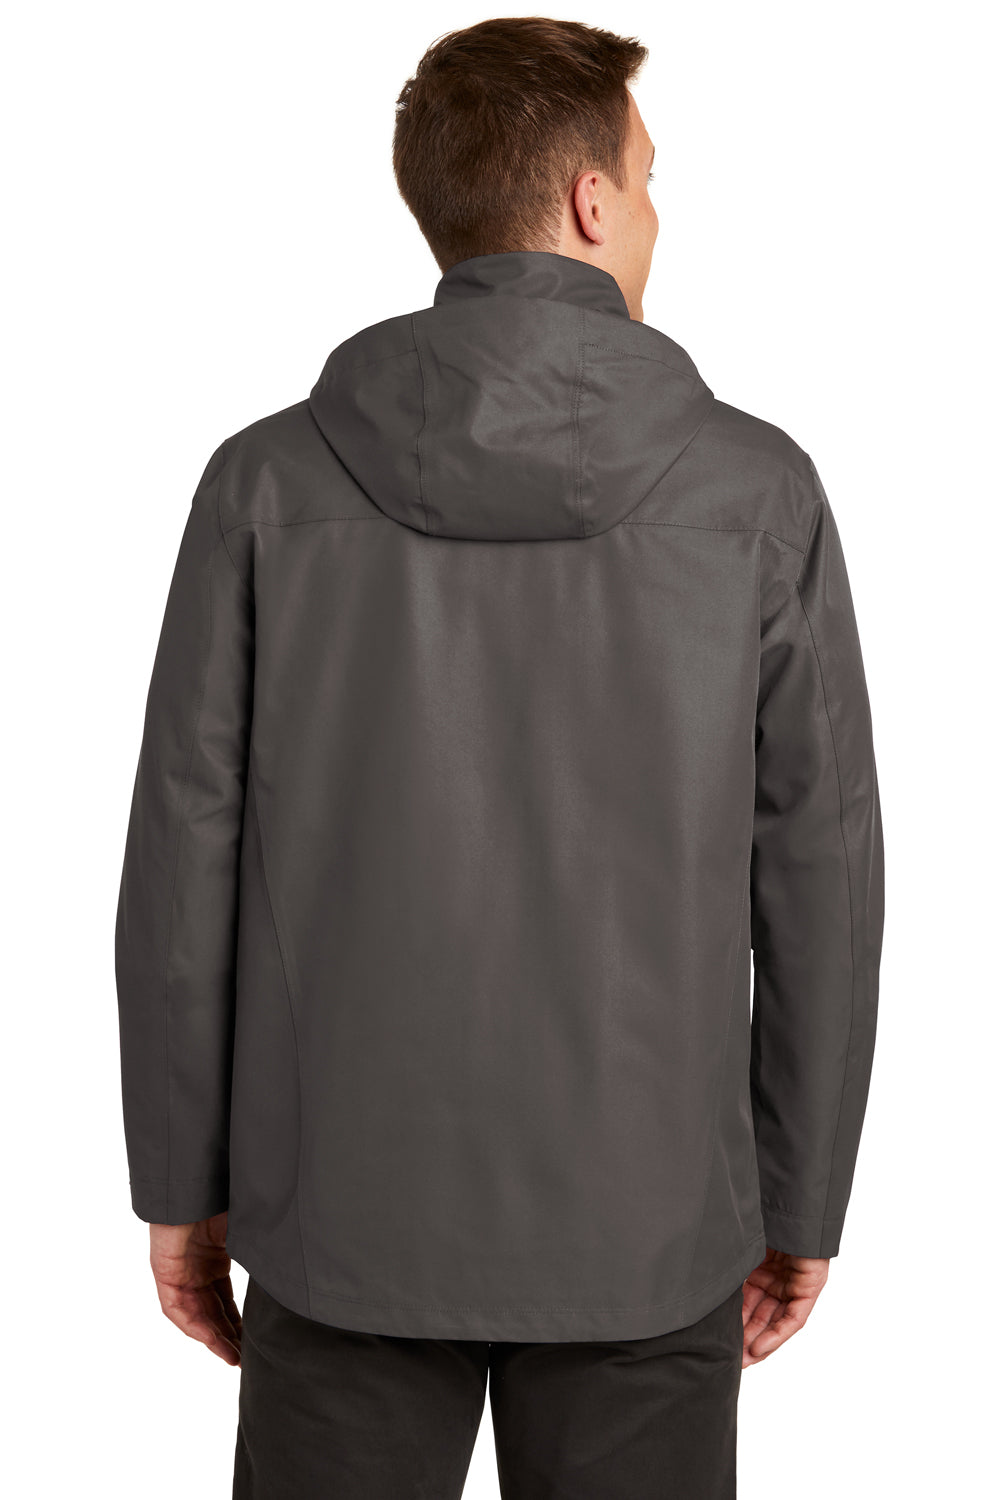 Port Authority J900 Mens Collective Waterproof Full Zip Hooded Jacket Graphite Grey Back